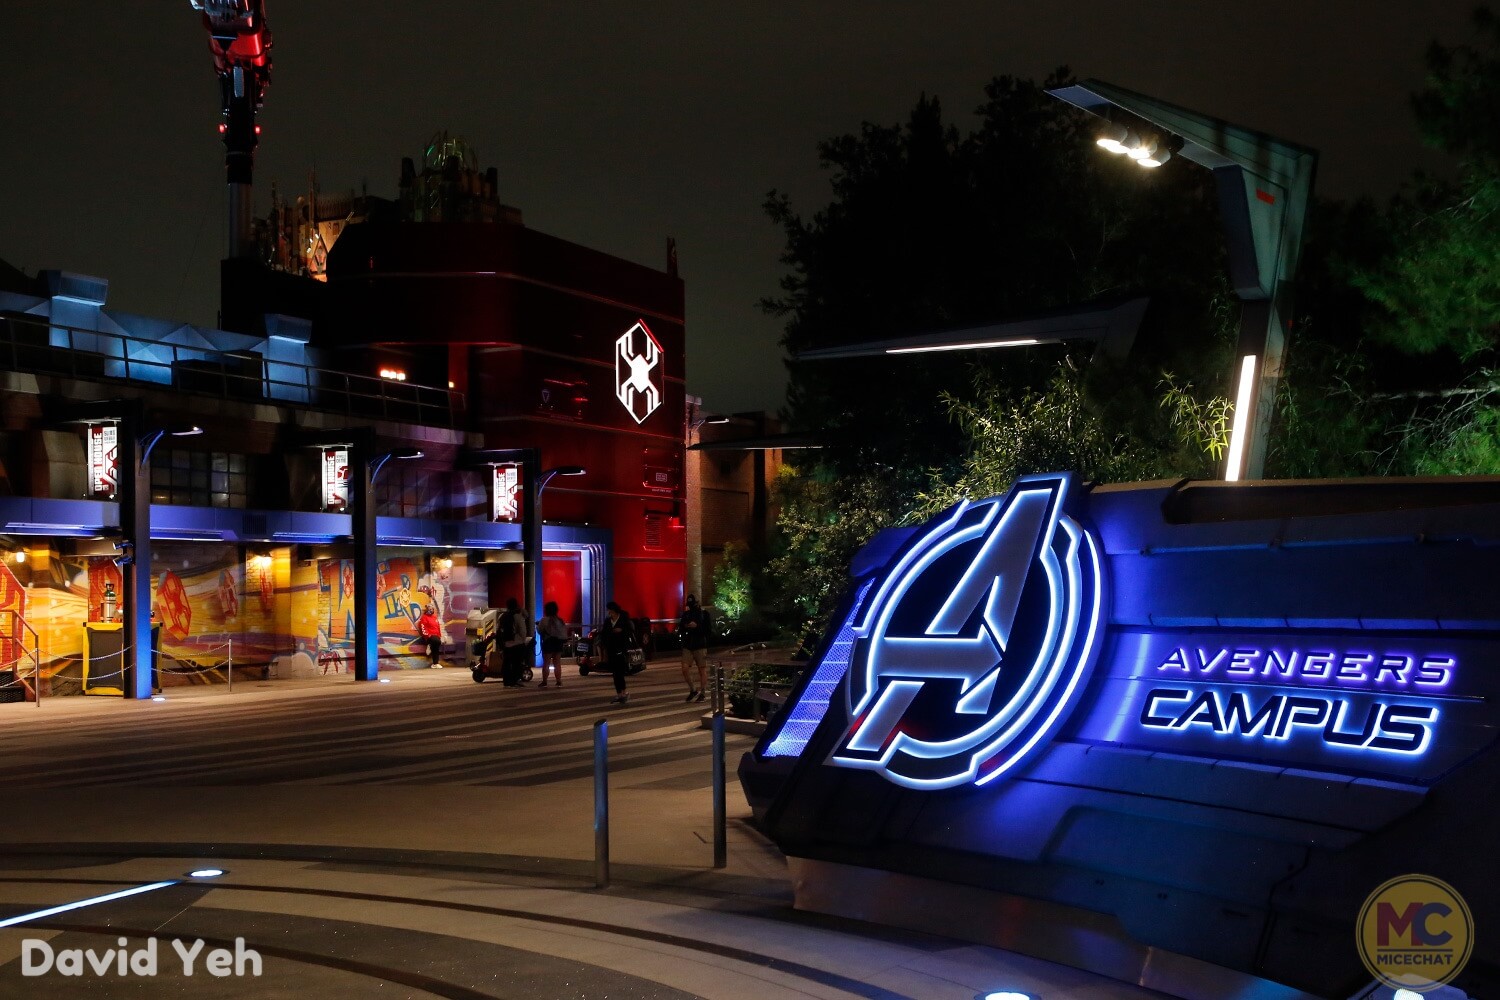 , Dateline Disneyland: Avengers Campus Opening Was No Marvel